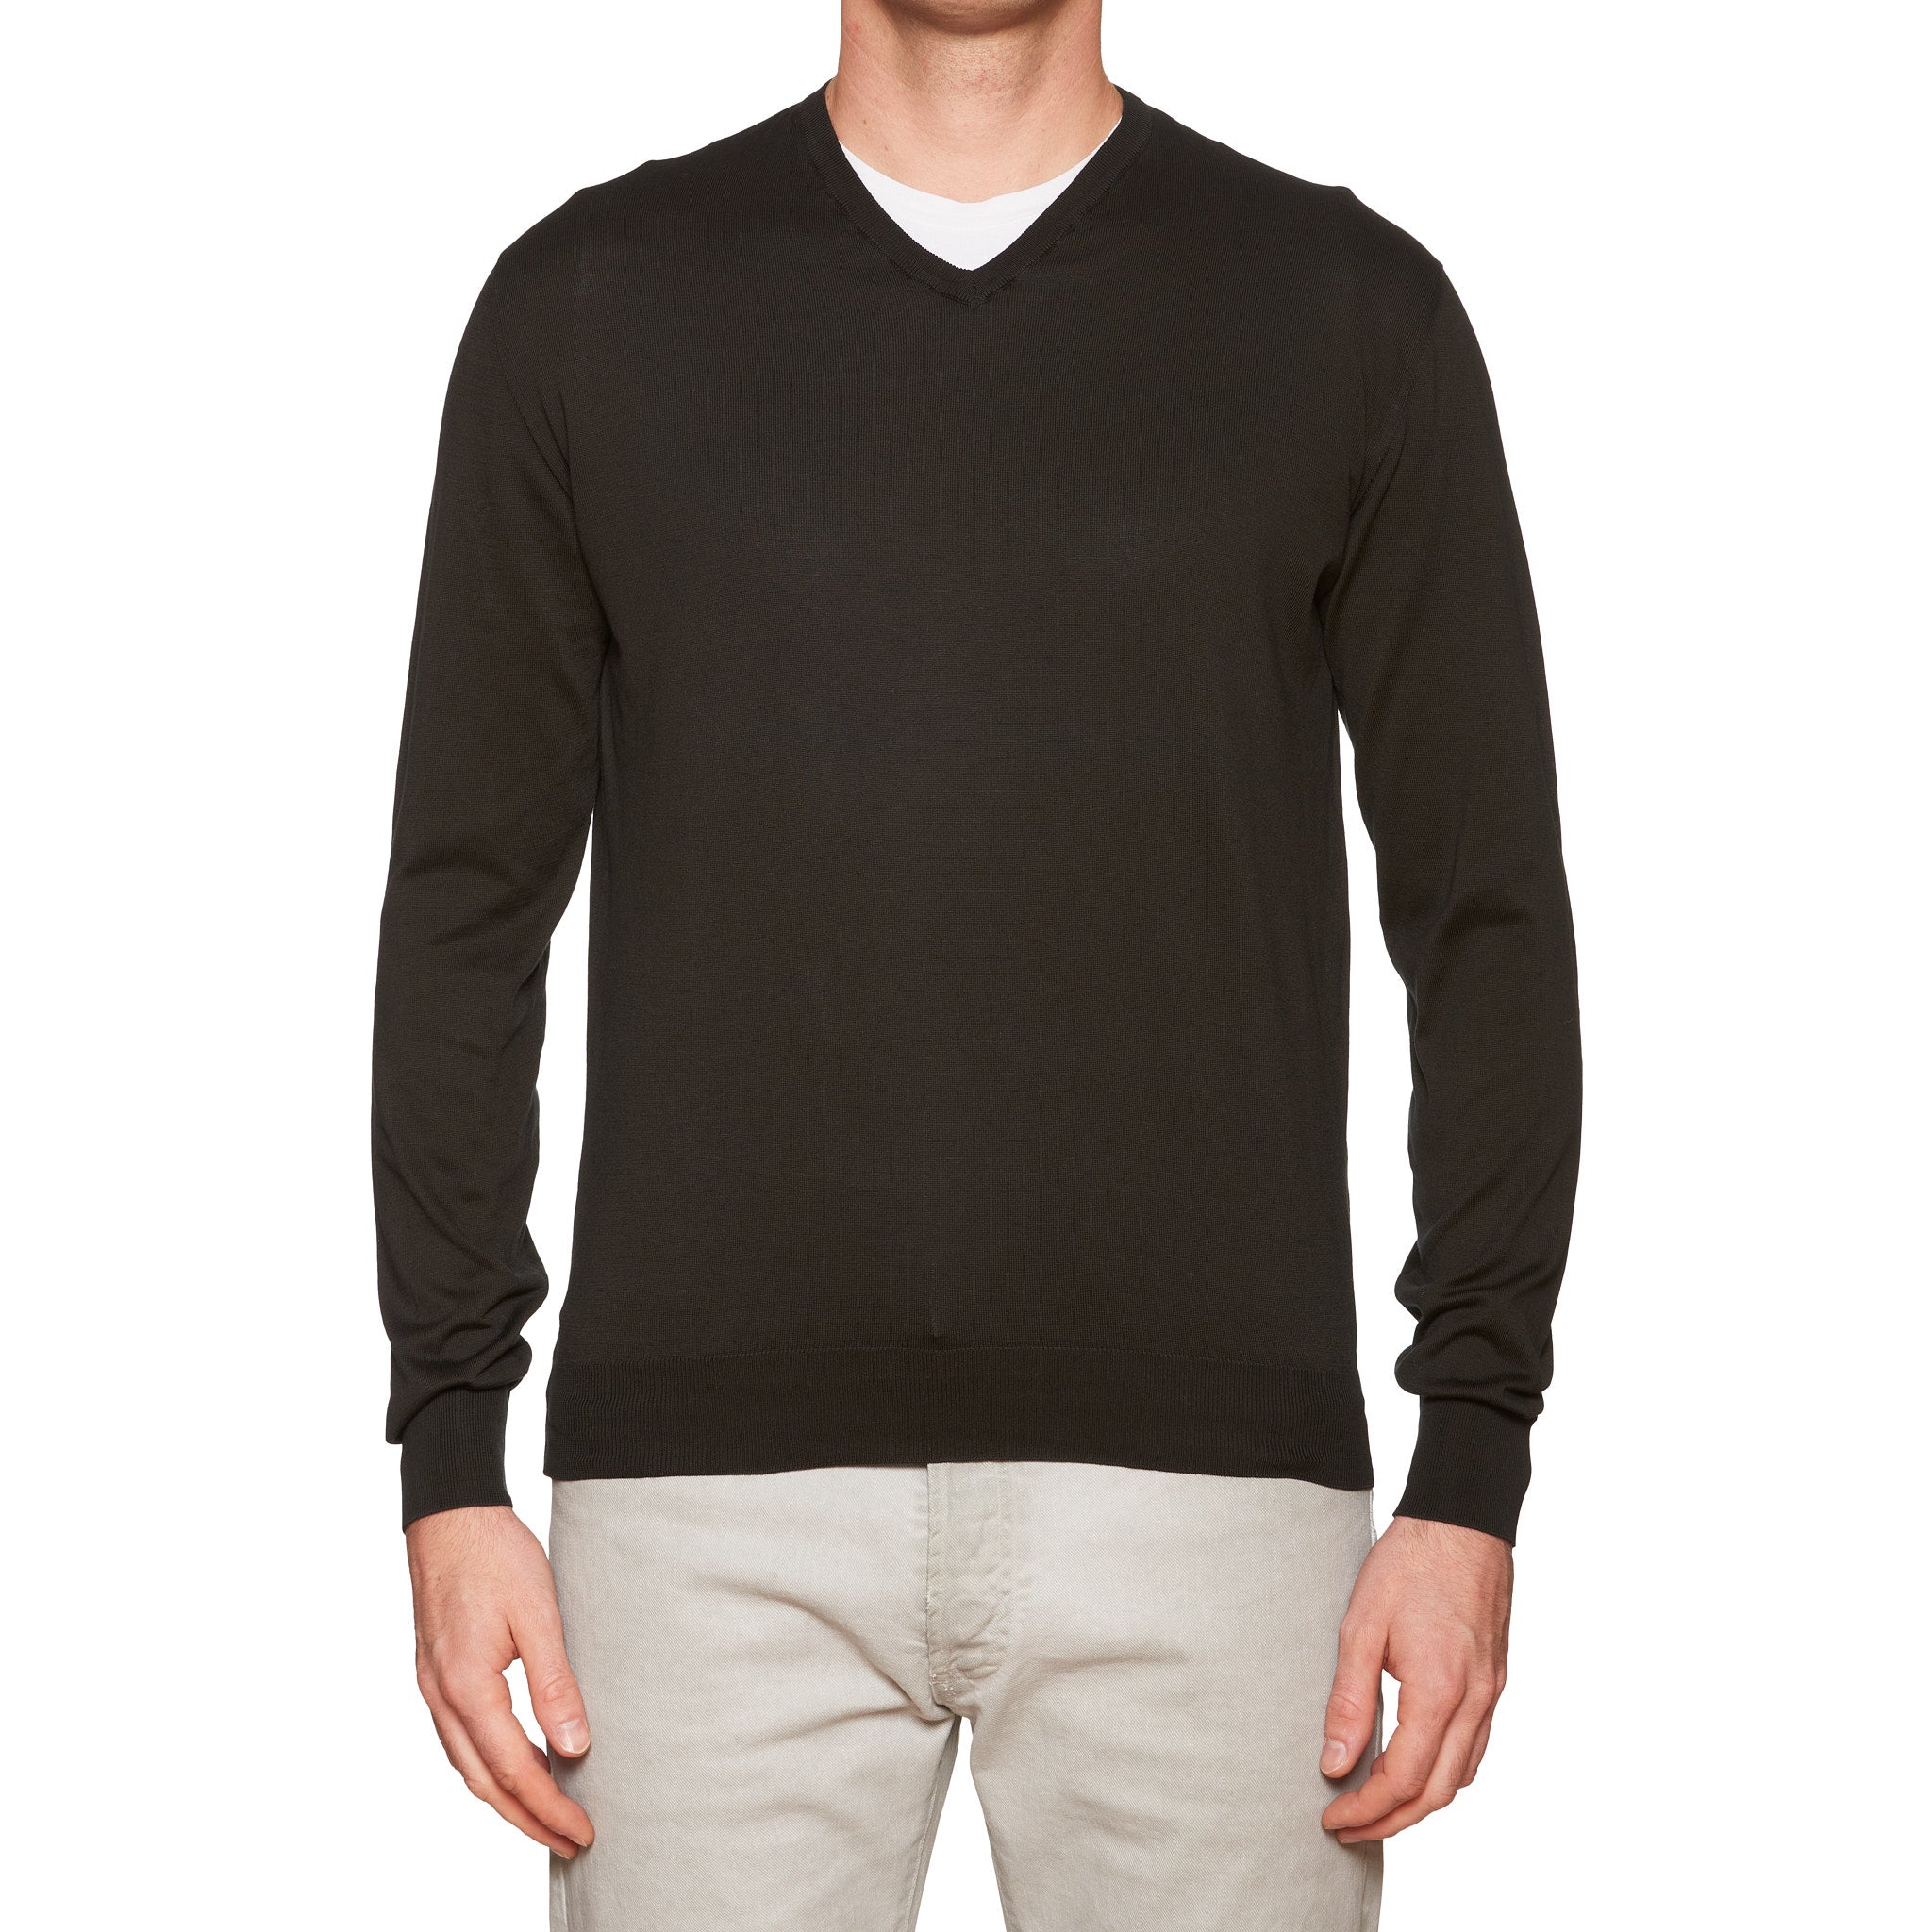 FEDELI Black Garment Dyed Dusty System Cotton V-Neck Sweater 52 NEW L